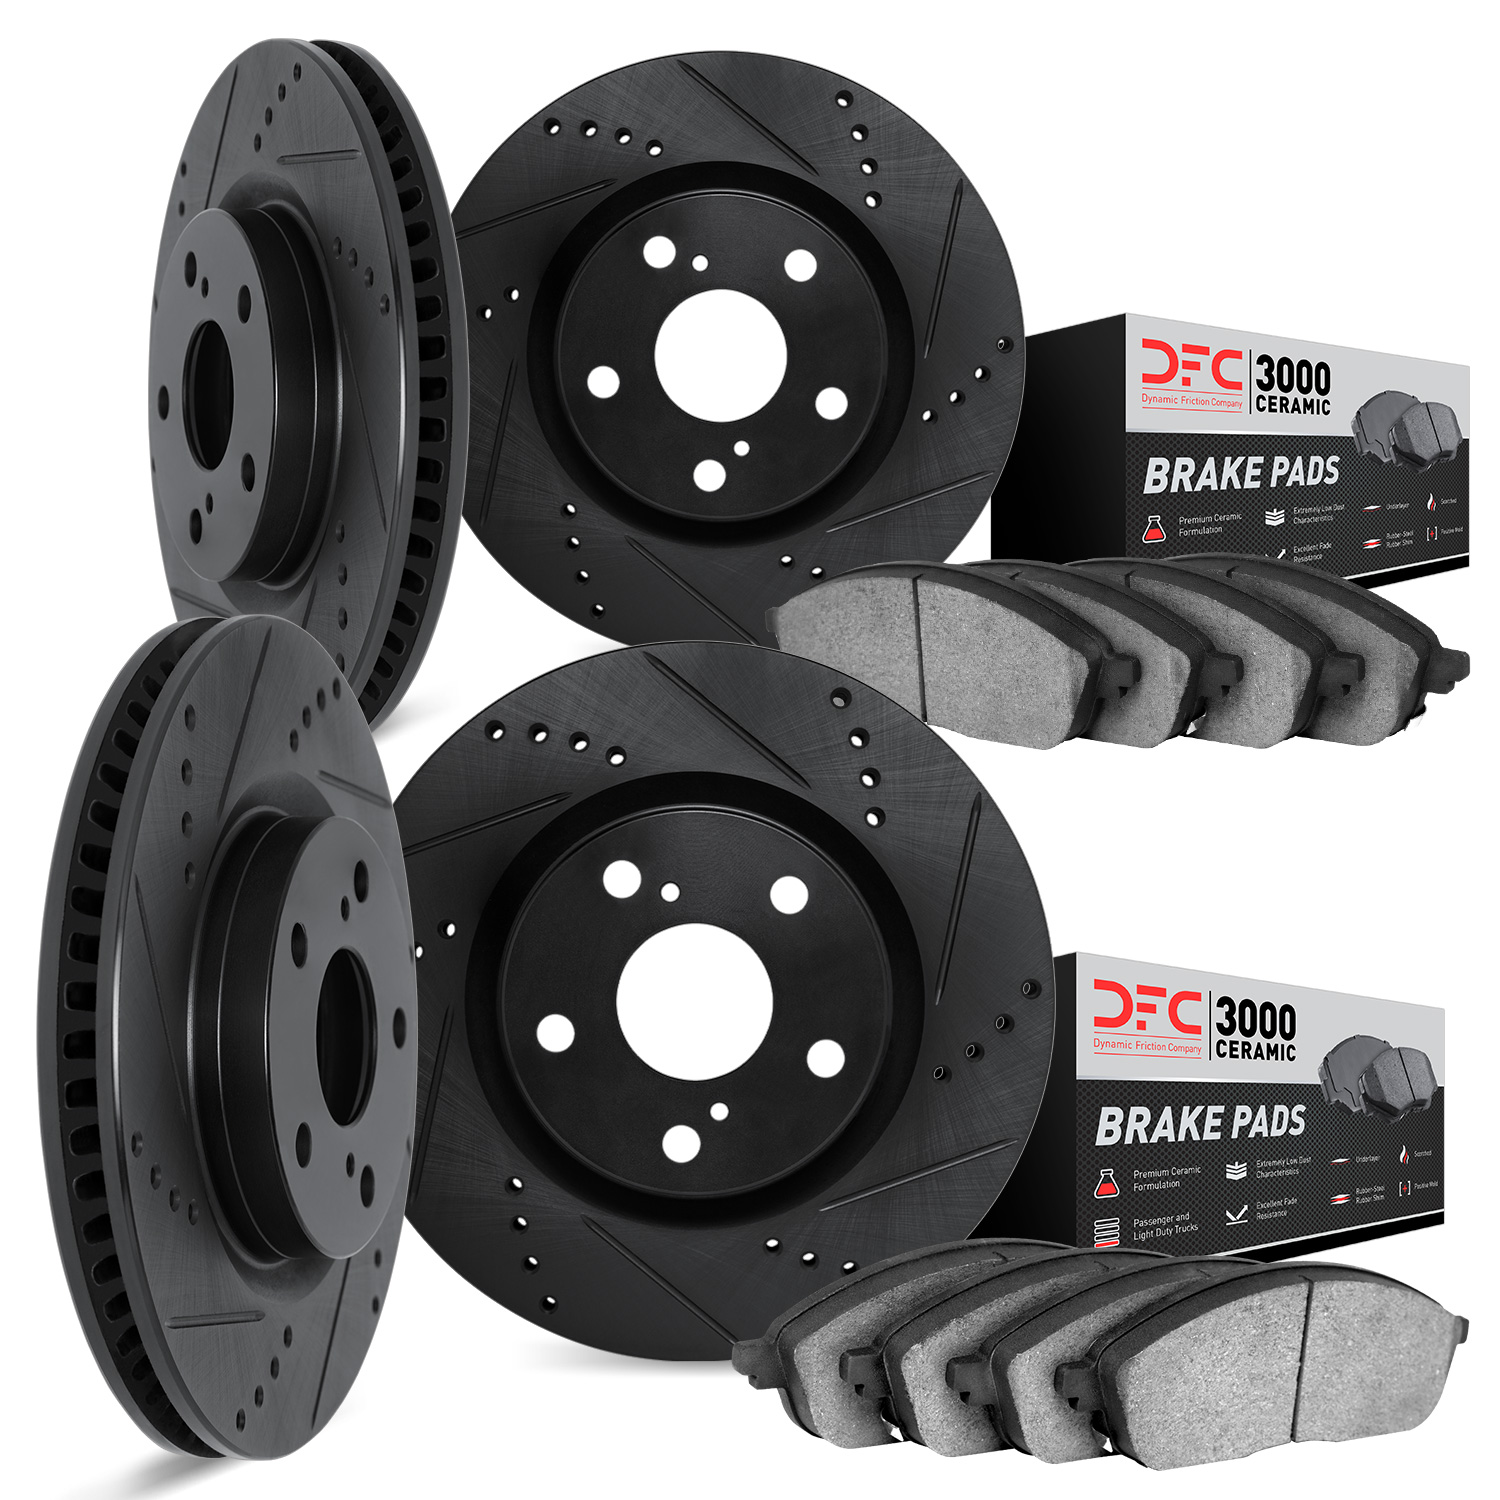 8304-20014 Drilled/Slotted Brake Rotors with 3000-Series Ceramic Brake Pads Kit [Black], 2013-2015 Jaguar, Position: Front and R